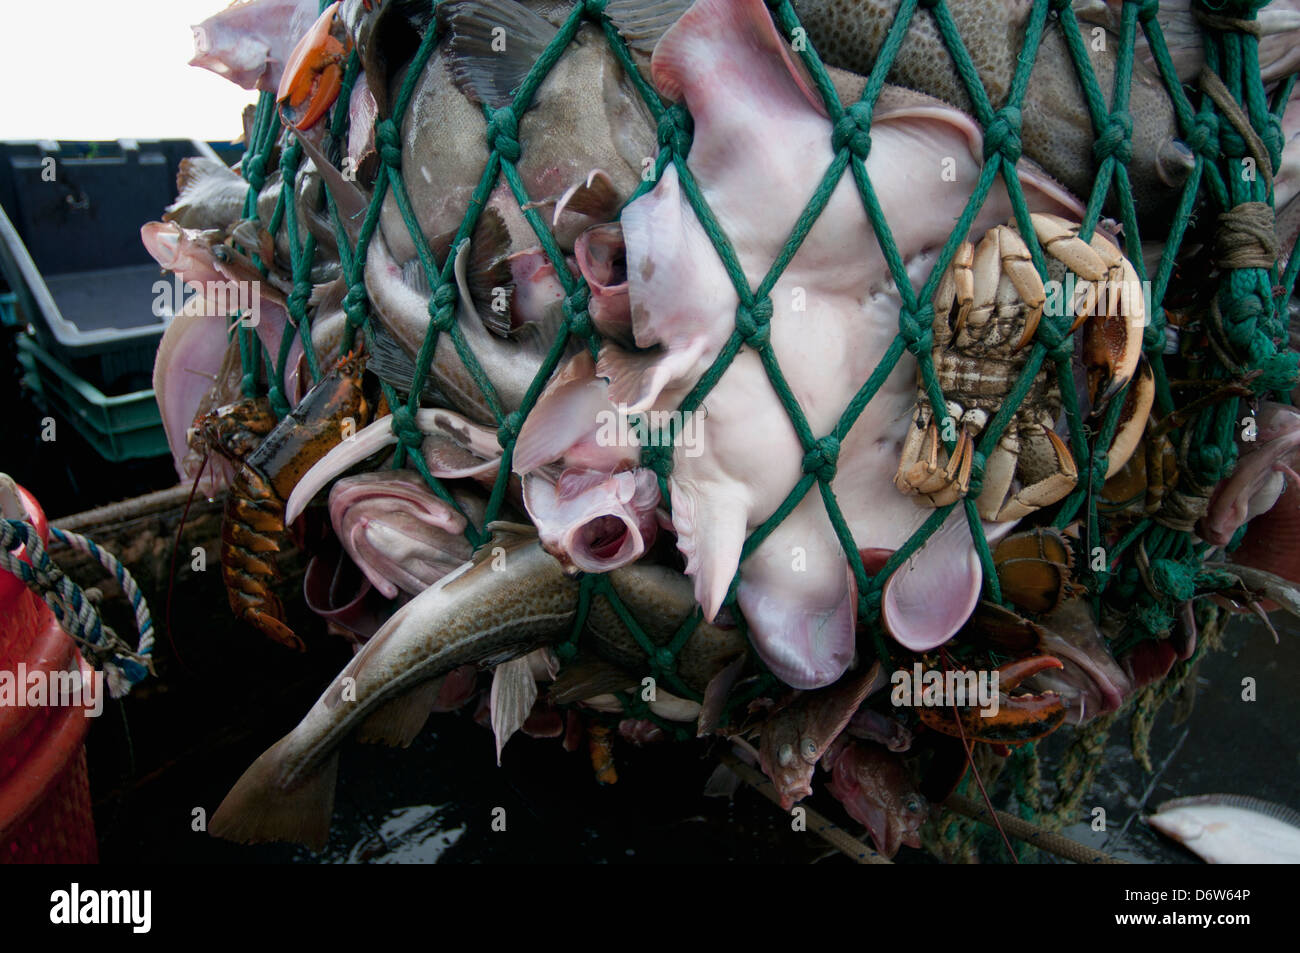 Dragger hauls in net full of Yellowtail Flounder (Limanda ferruginea), Little Skate (Leucoraja erinacea), Atlantic Cod fish Stock Photo